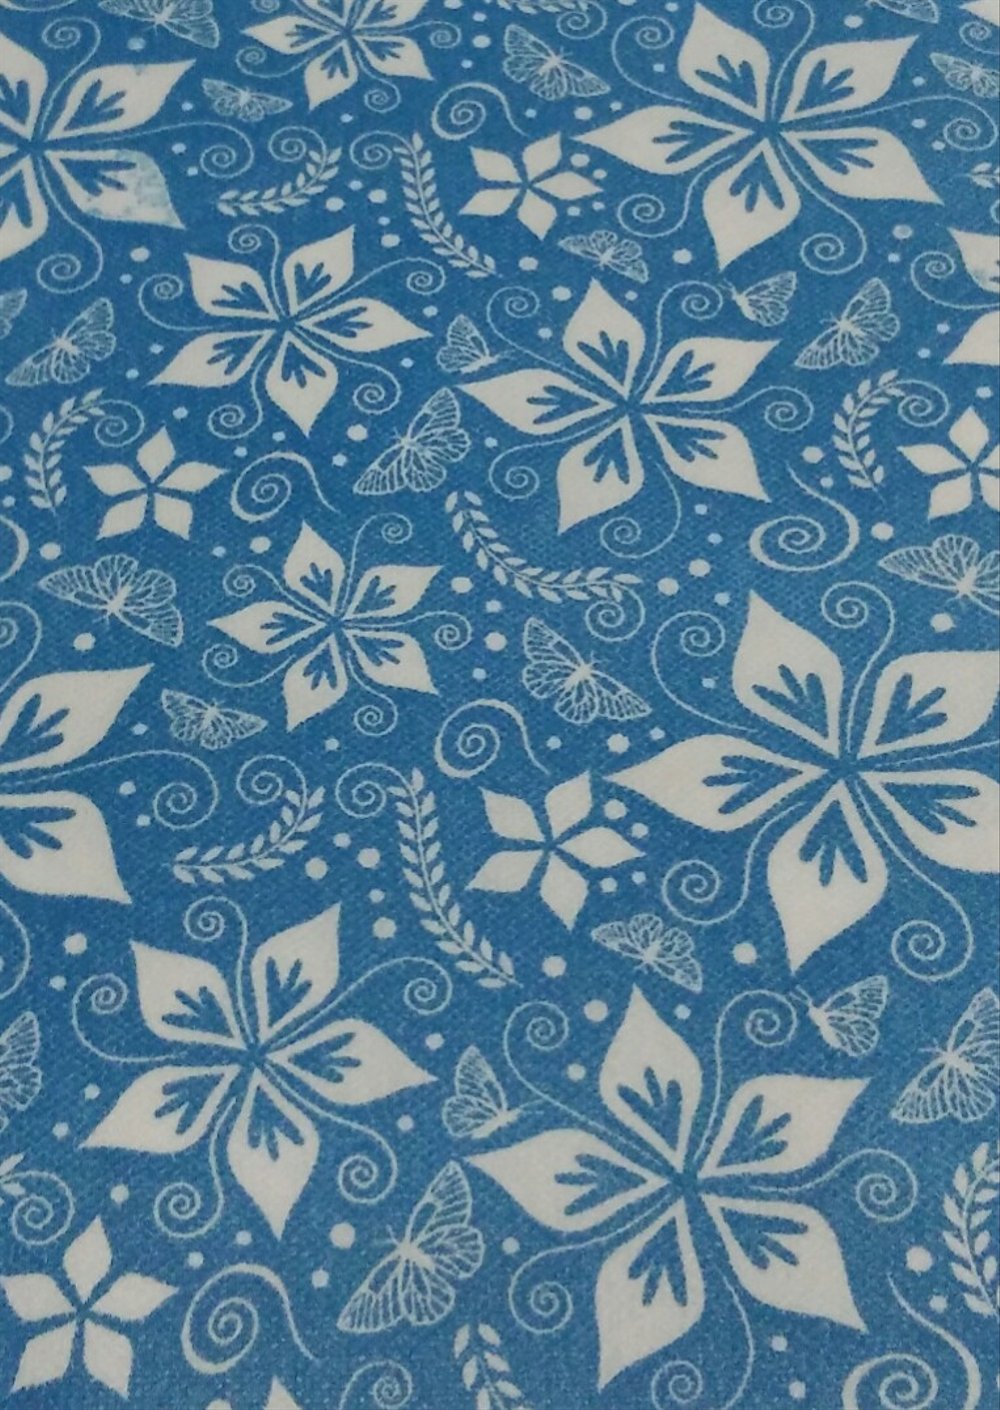 wallpaper biru muda,blue,pattern,cobalt blue,textile,aqua